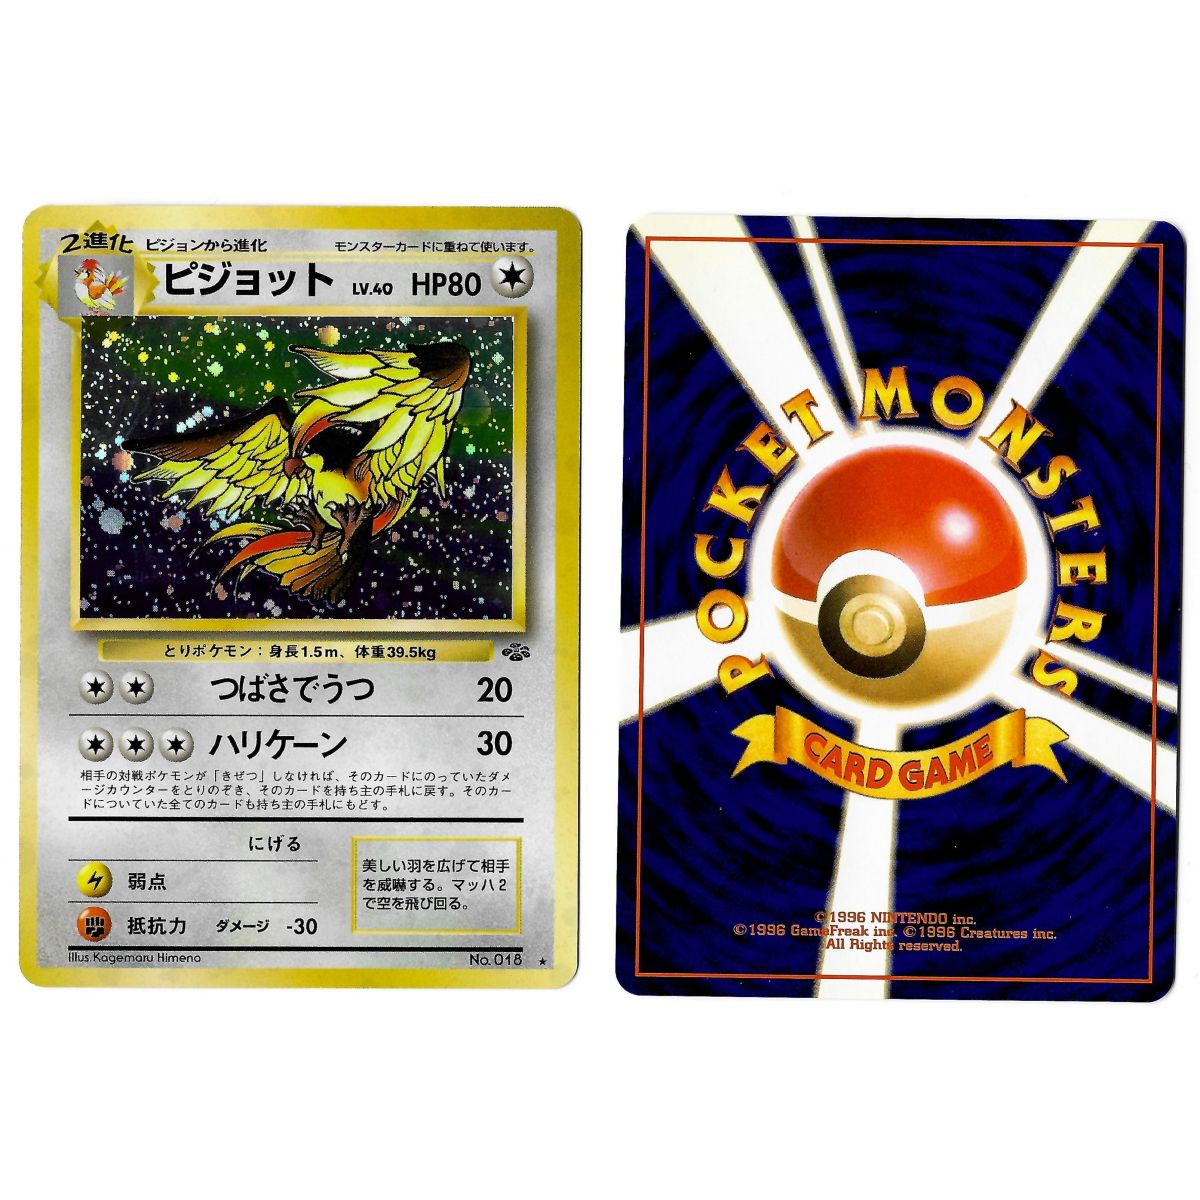 POKÉMON CARD GAME - Japanese Pokémon cards - Cartes Pokémon japonaises